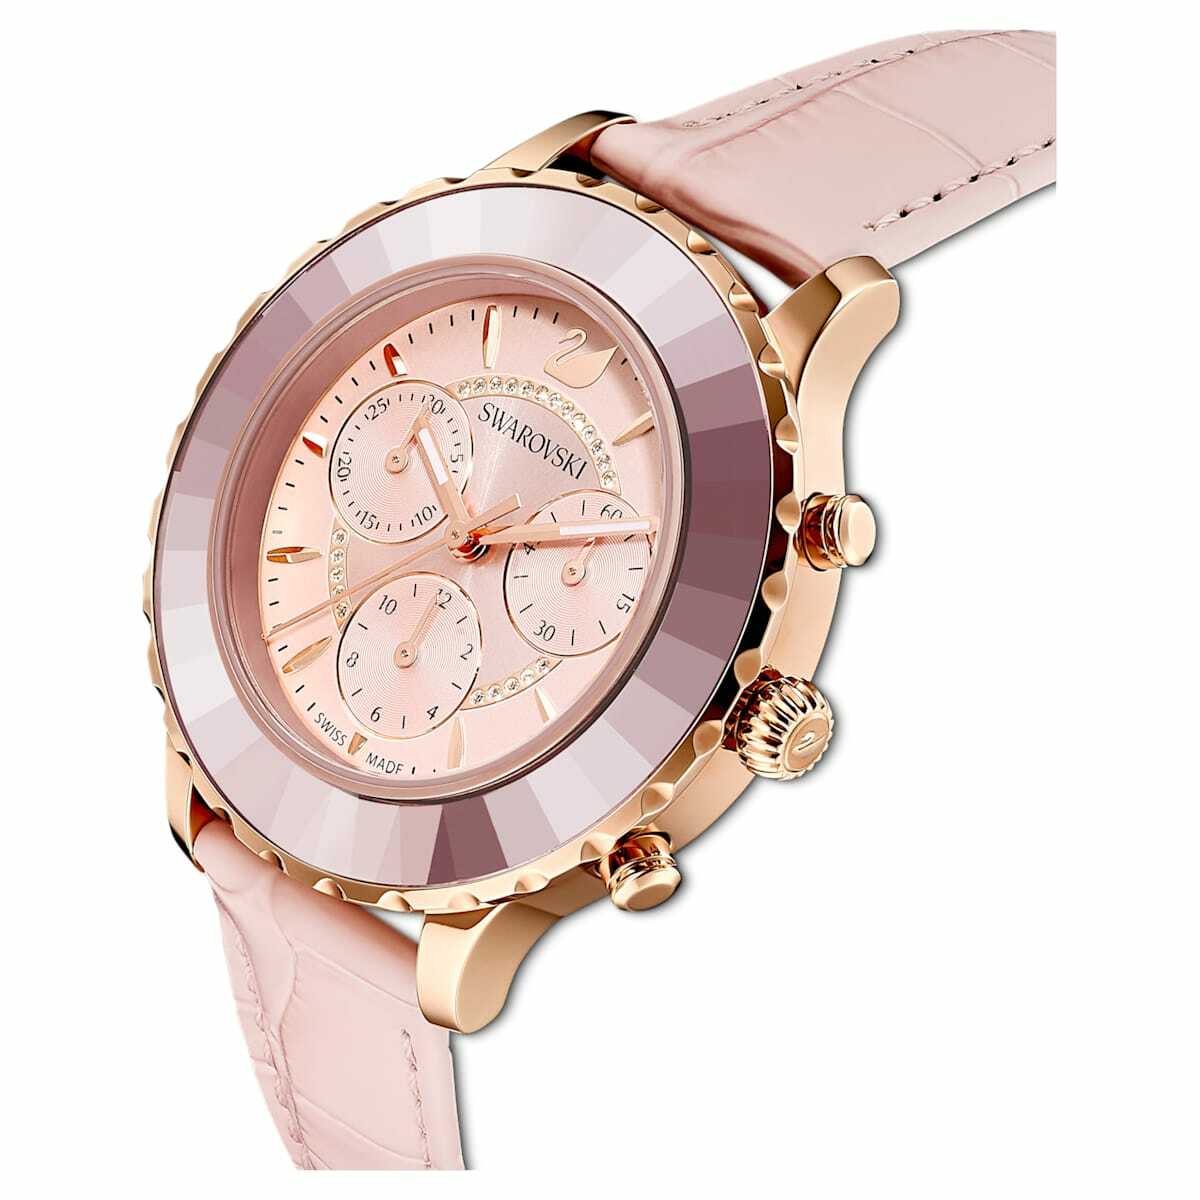 octea-lux-chrono-watch--leather-strap--pink--rose-gold-tone-pvd-swarovski-5452501 (3).jpg